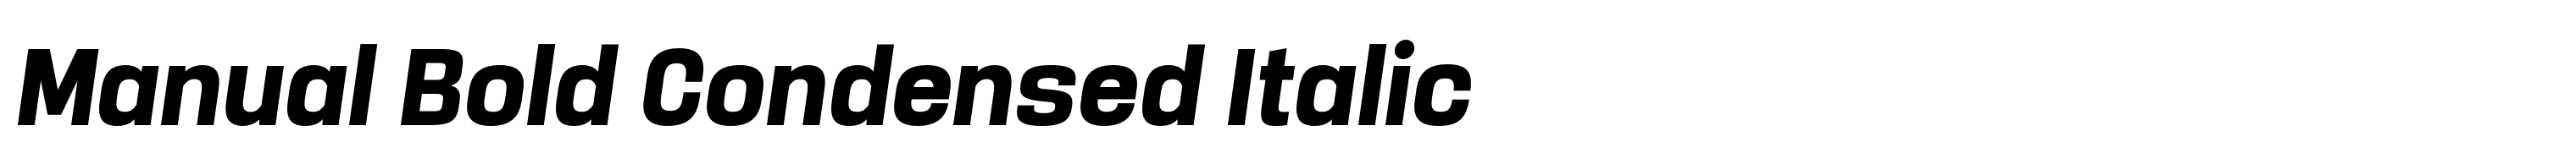 Manual Bold Condensed Italic